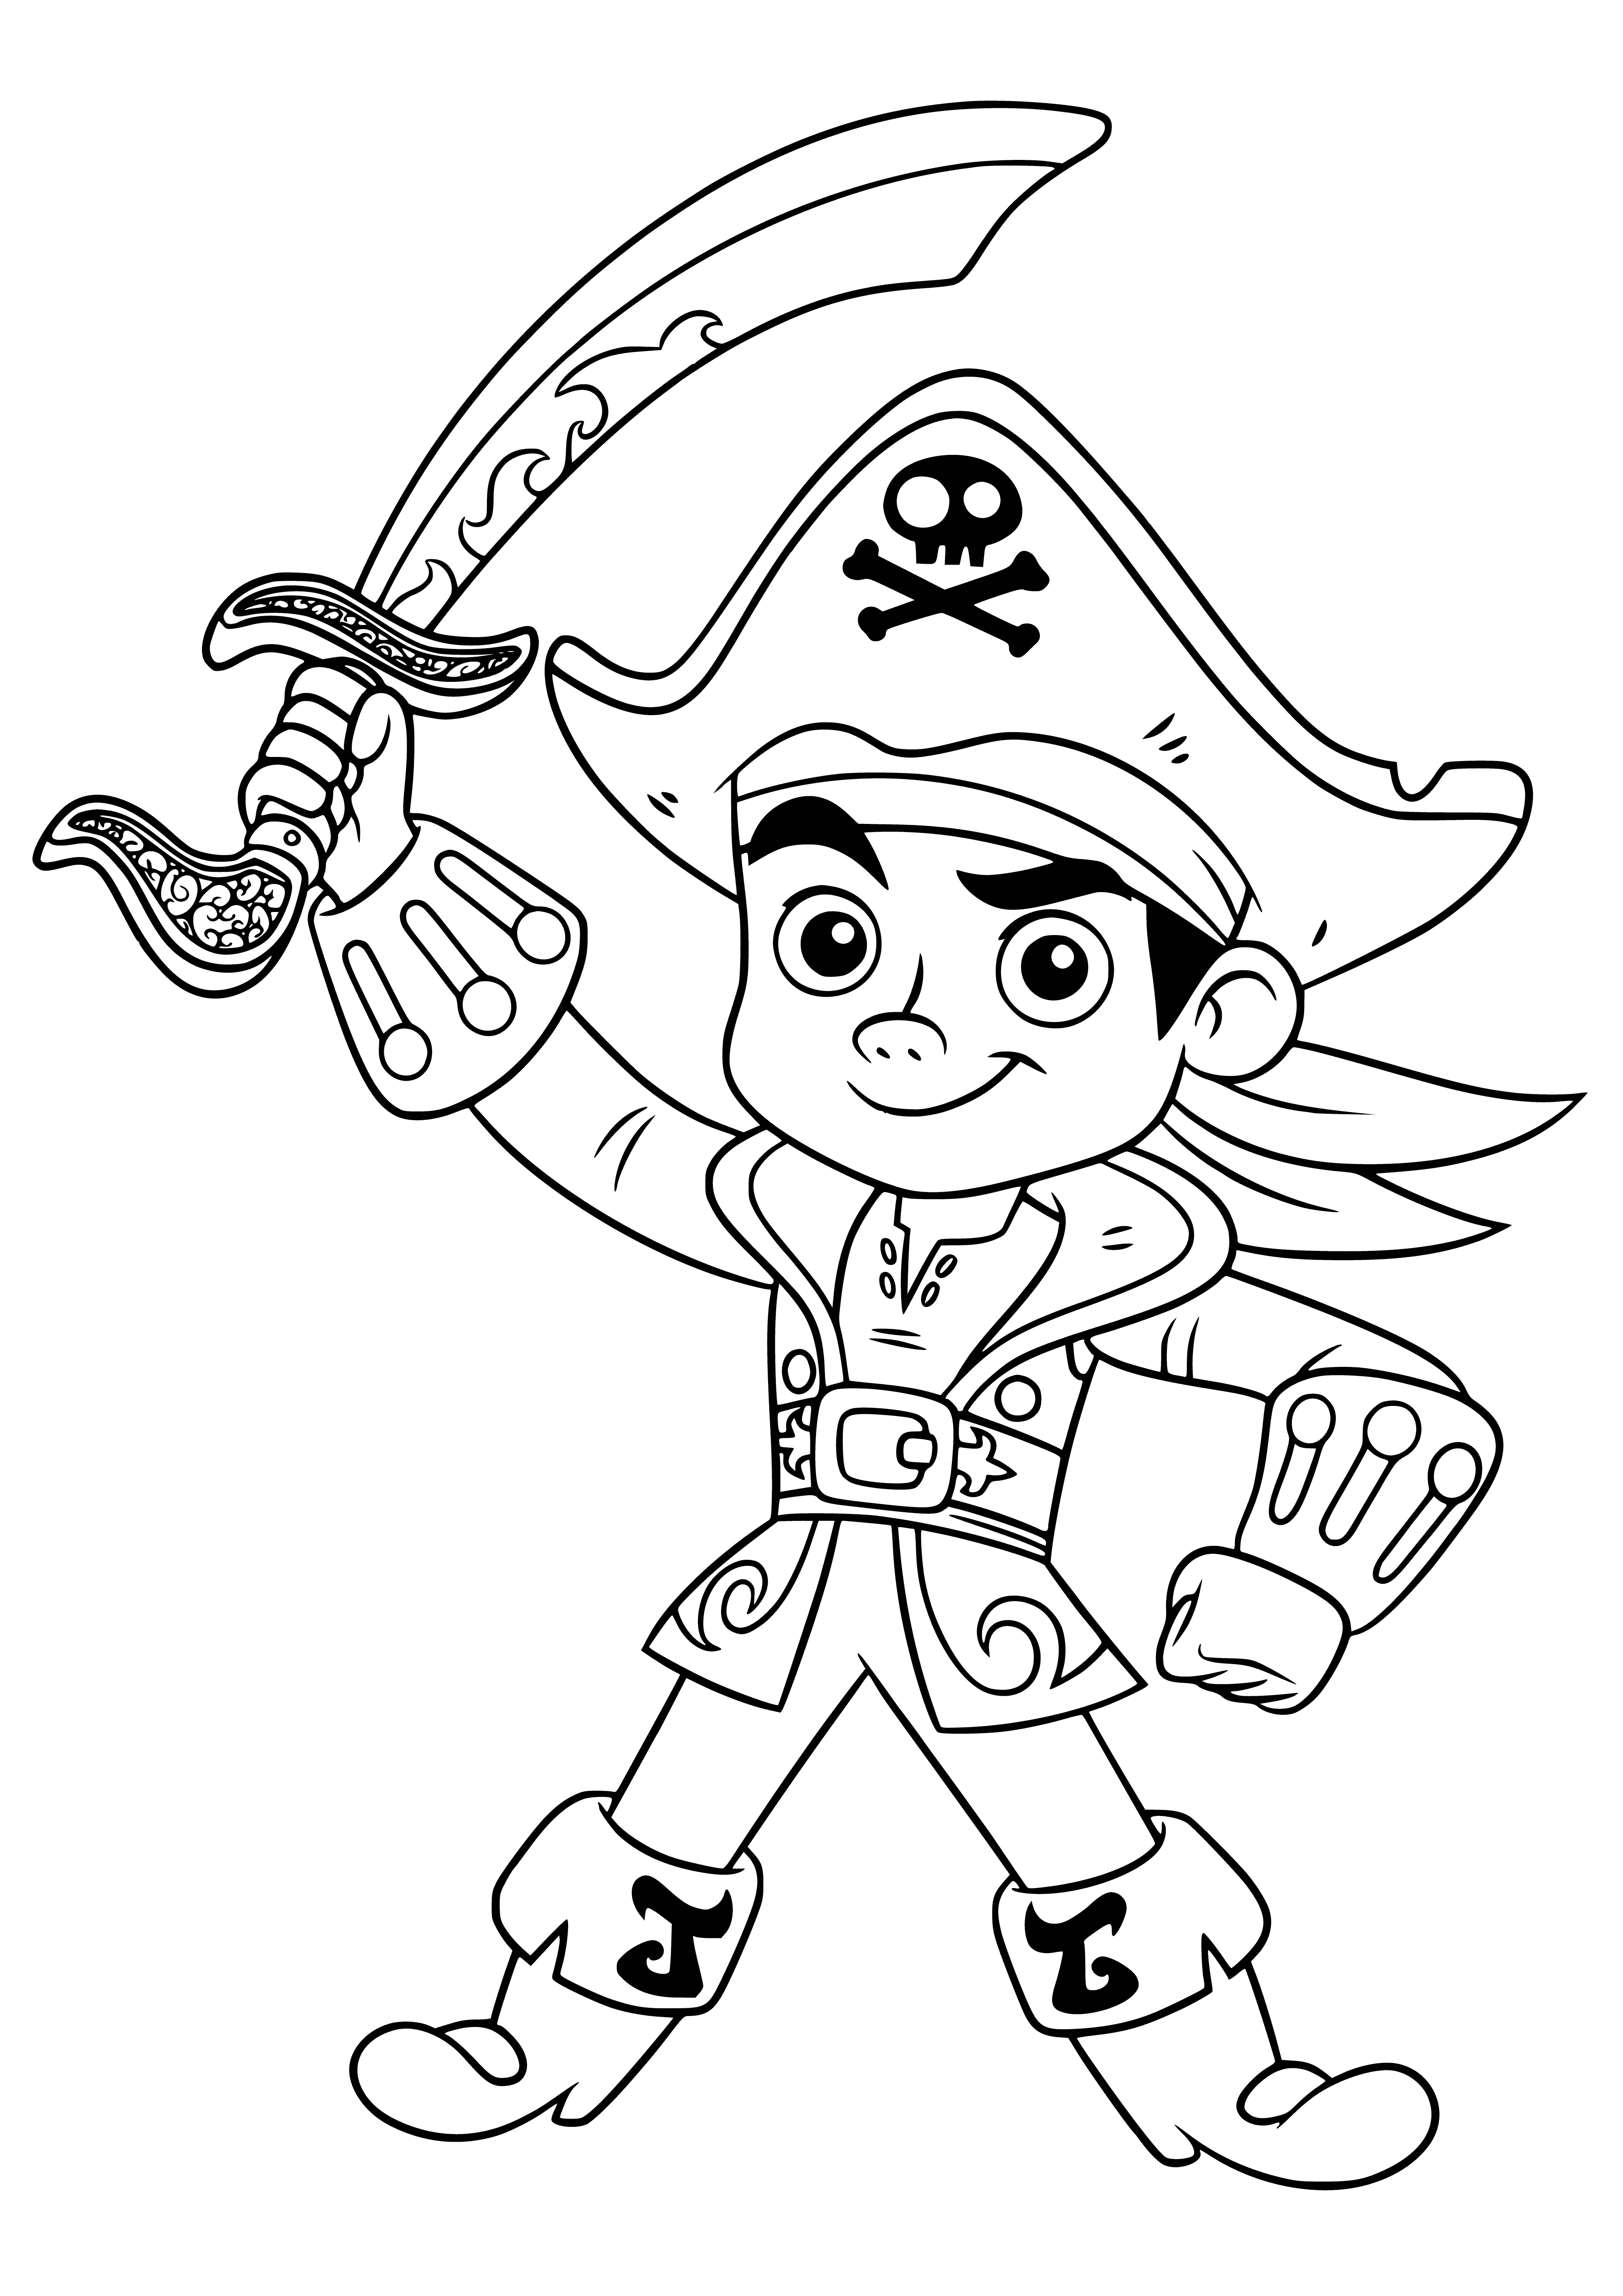 Jack le pirate coloriage